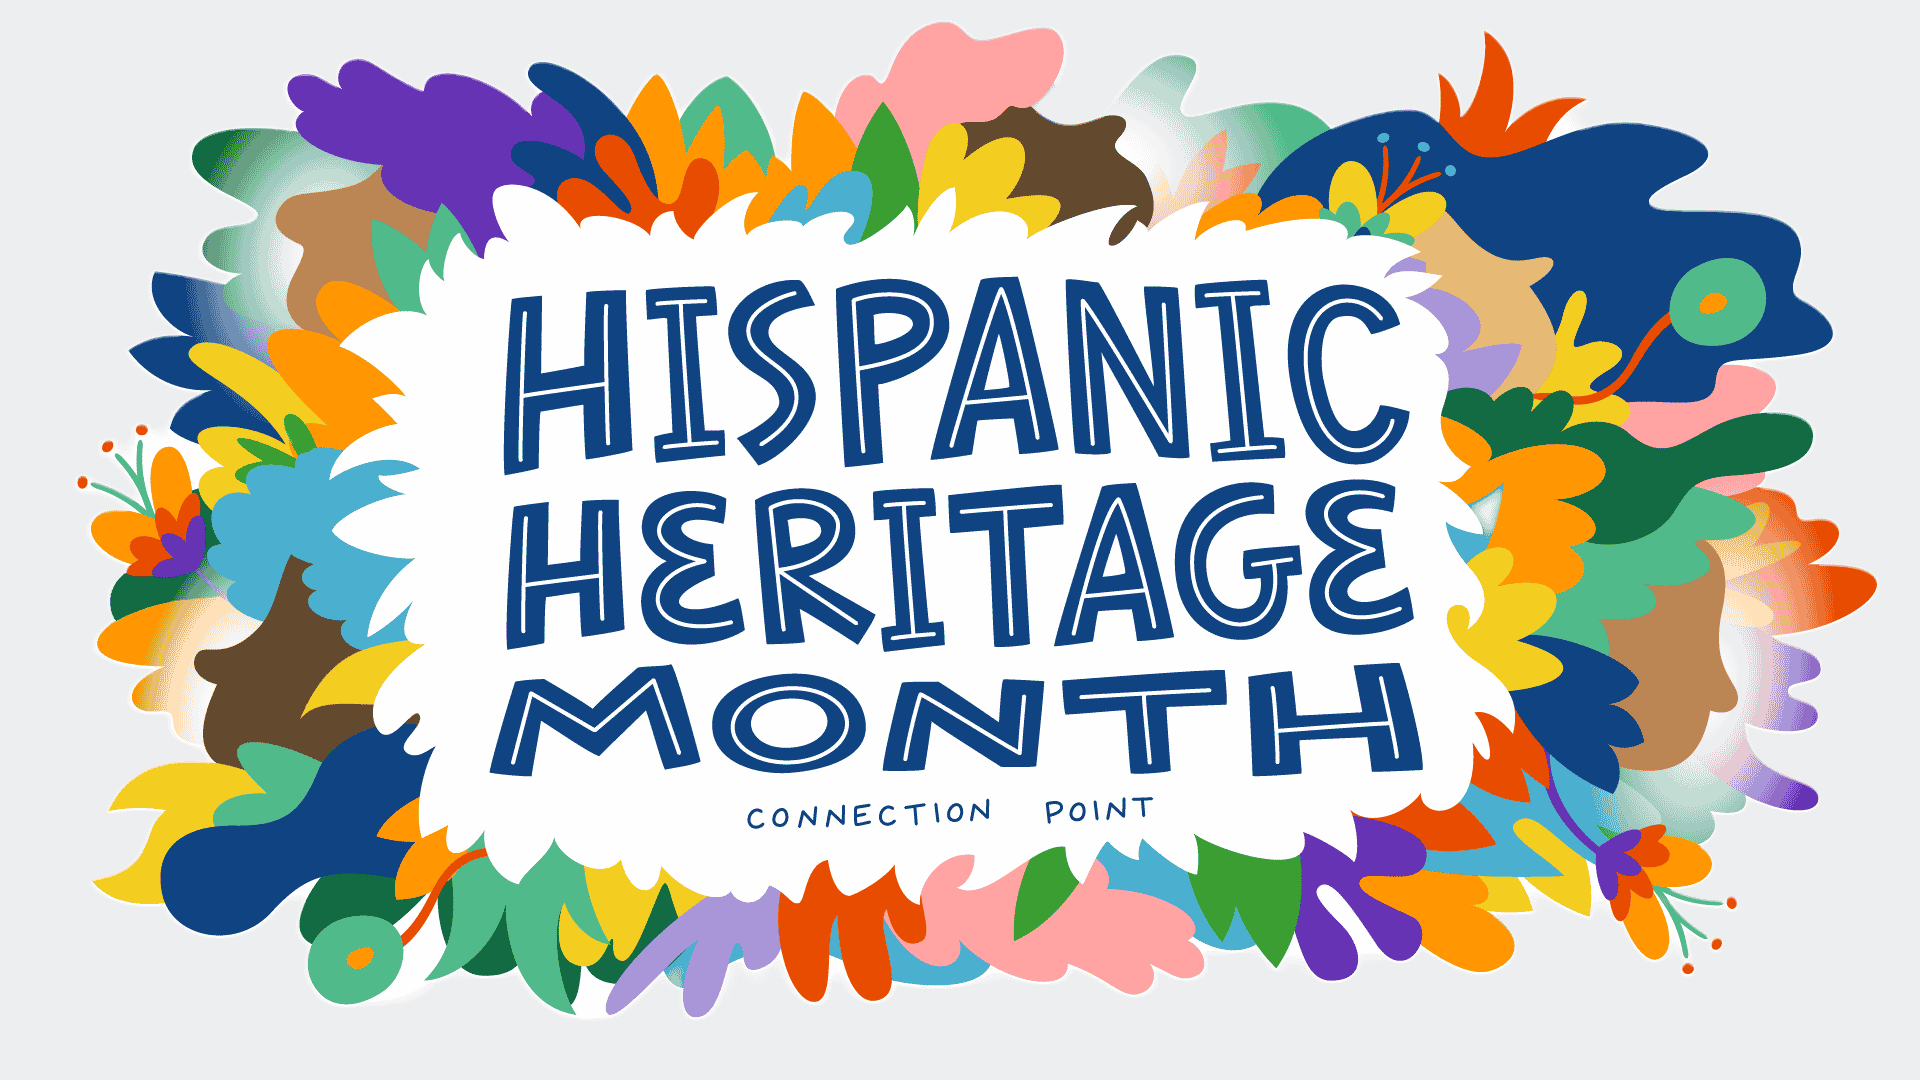 GNO, Inc. on X: For #HispanicHeritageMonth, we recognize Al